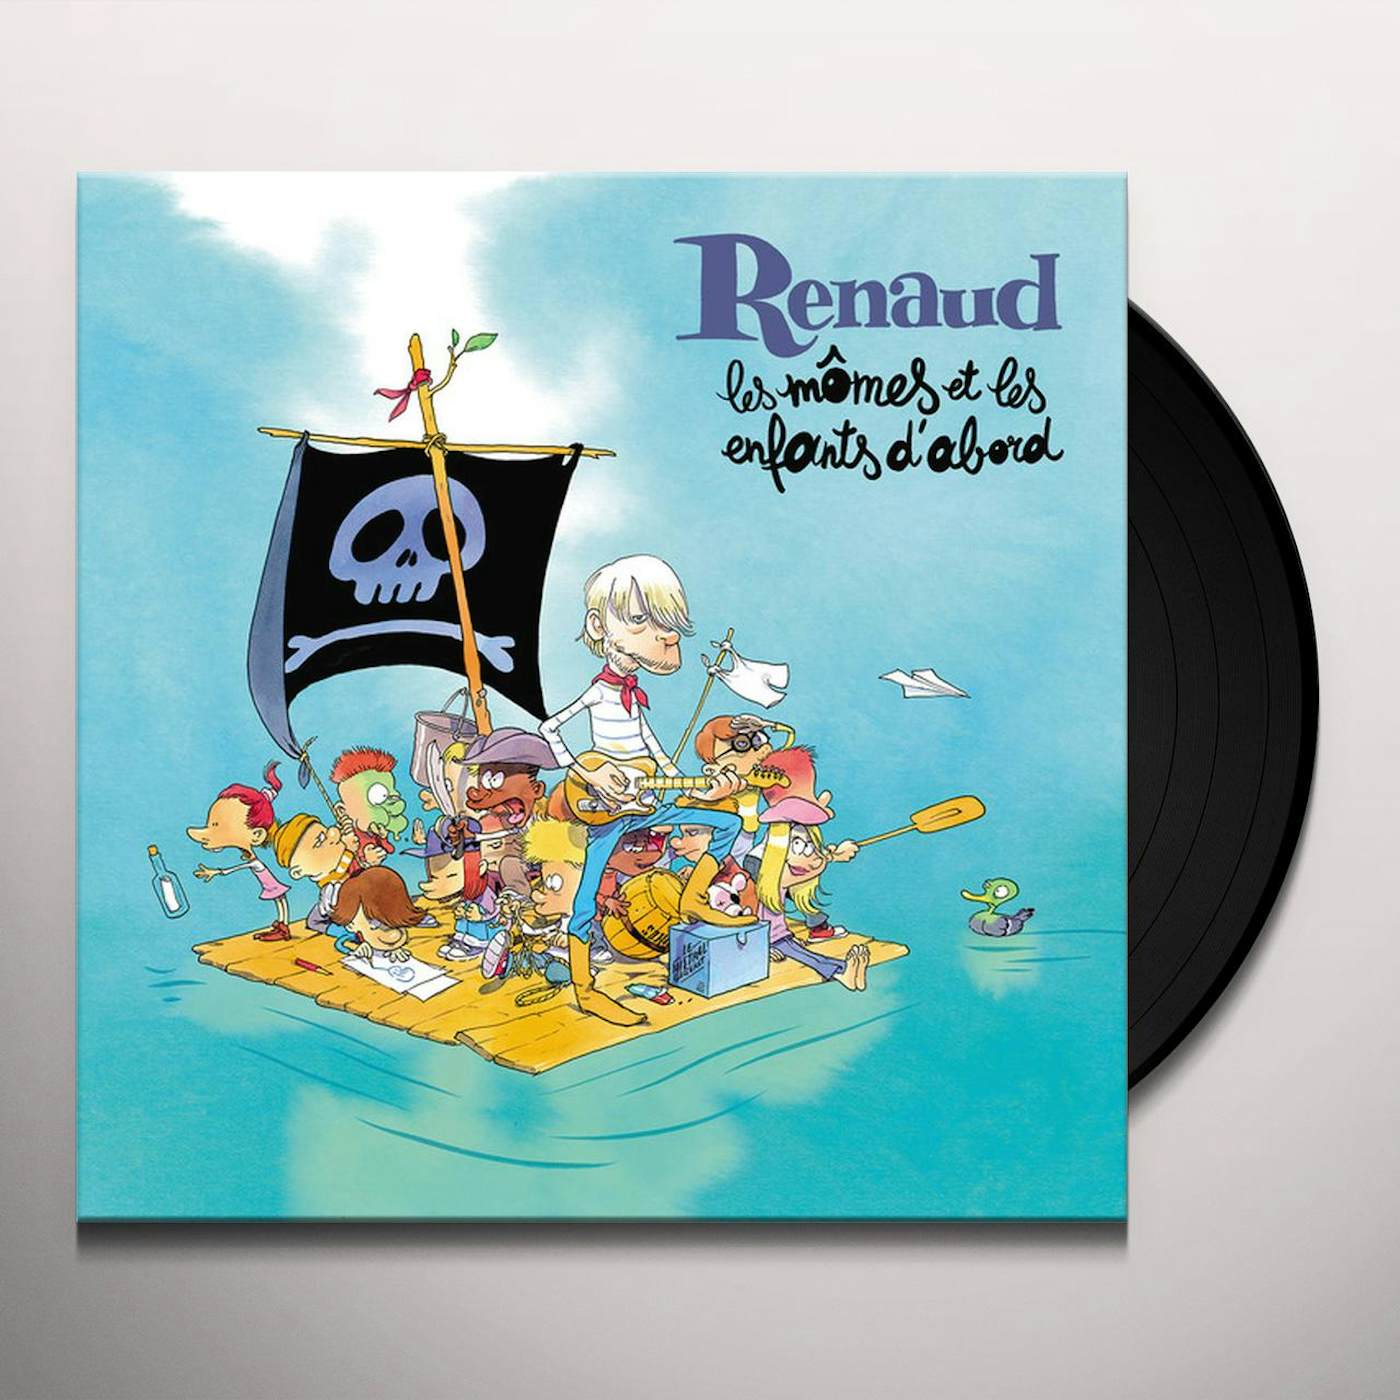 Renaud PUTAIN DE BEST OF Vinyl Record